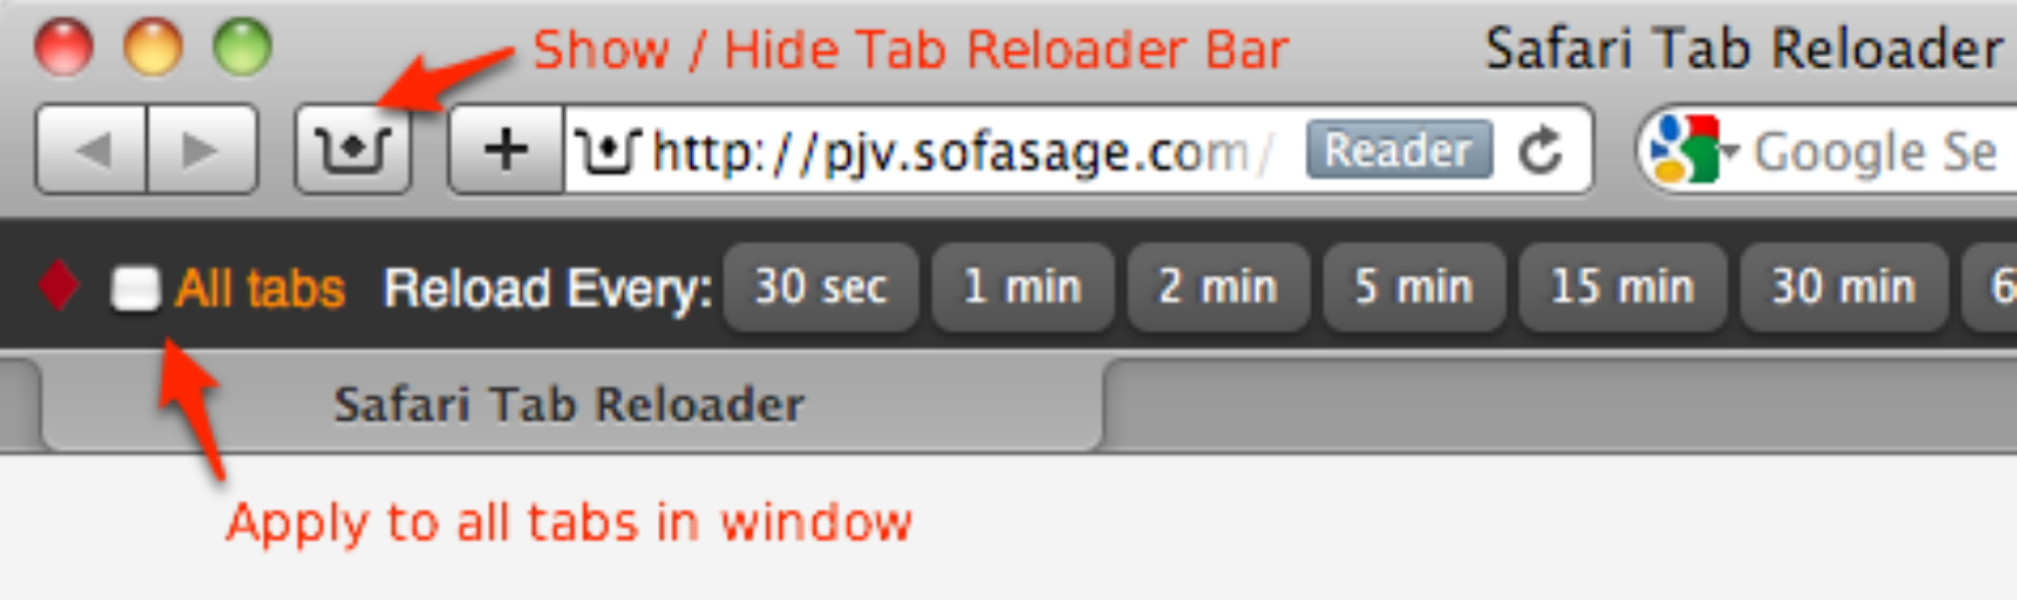 safari reloads tab switch back